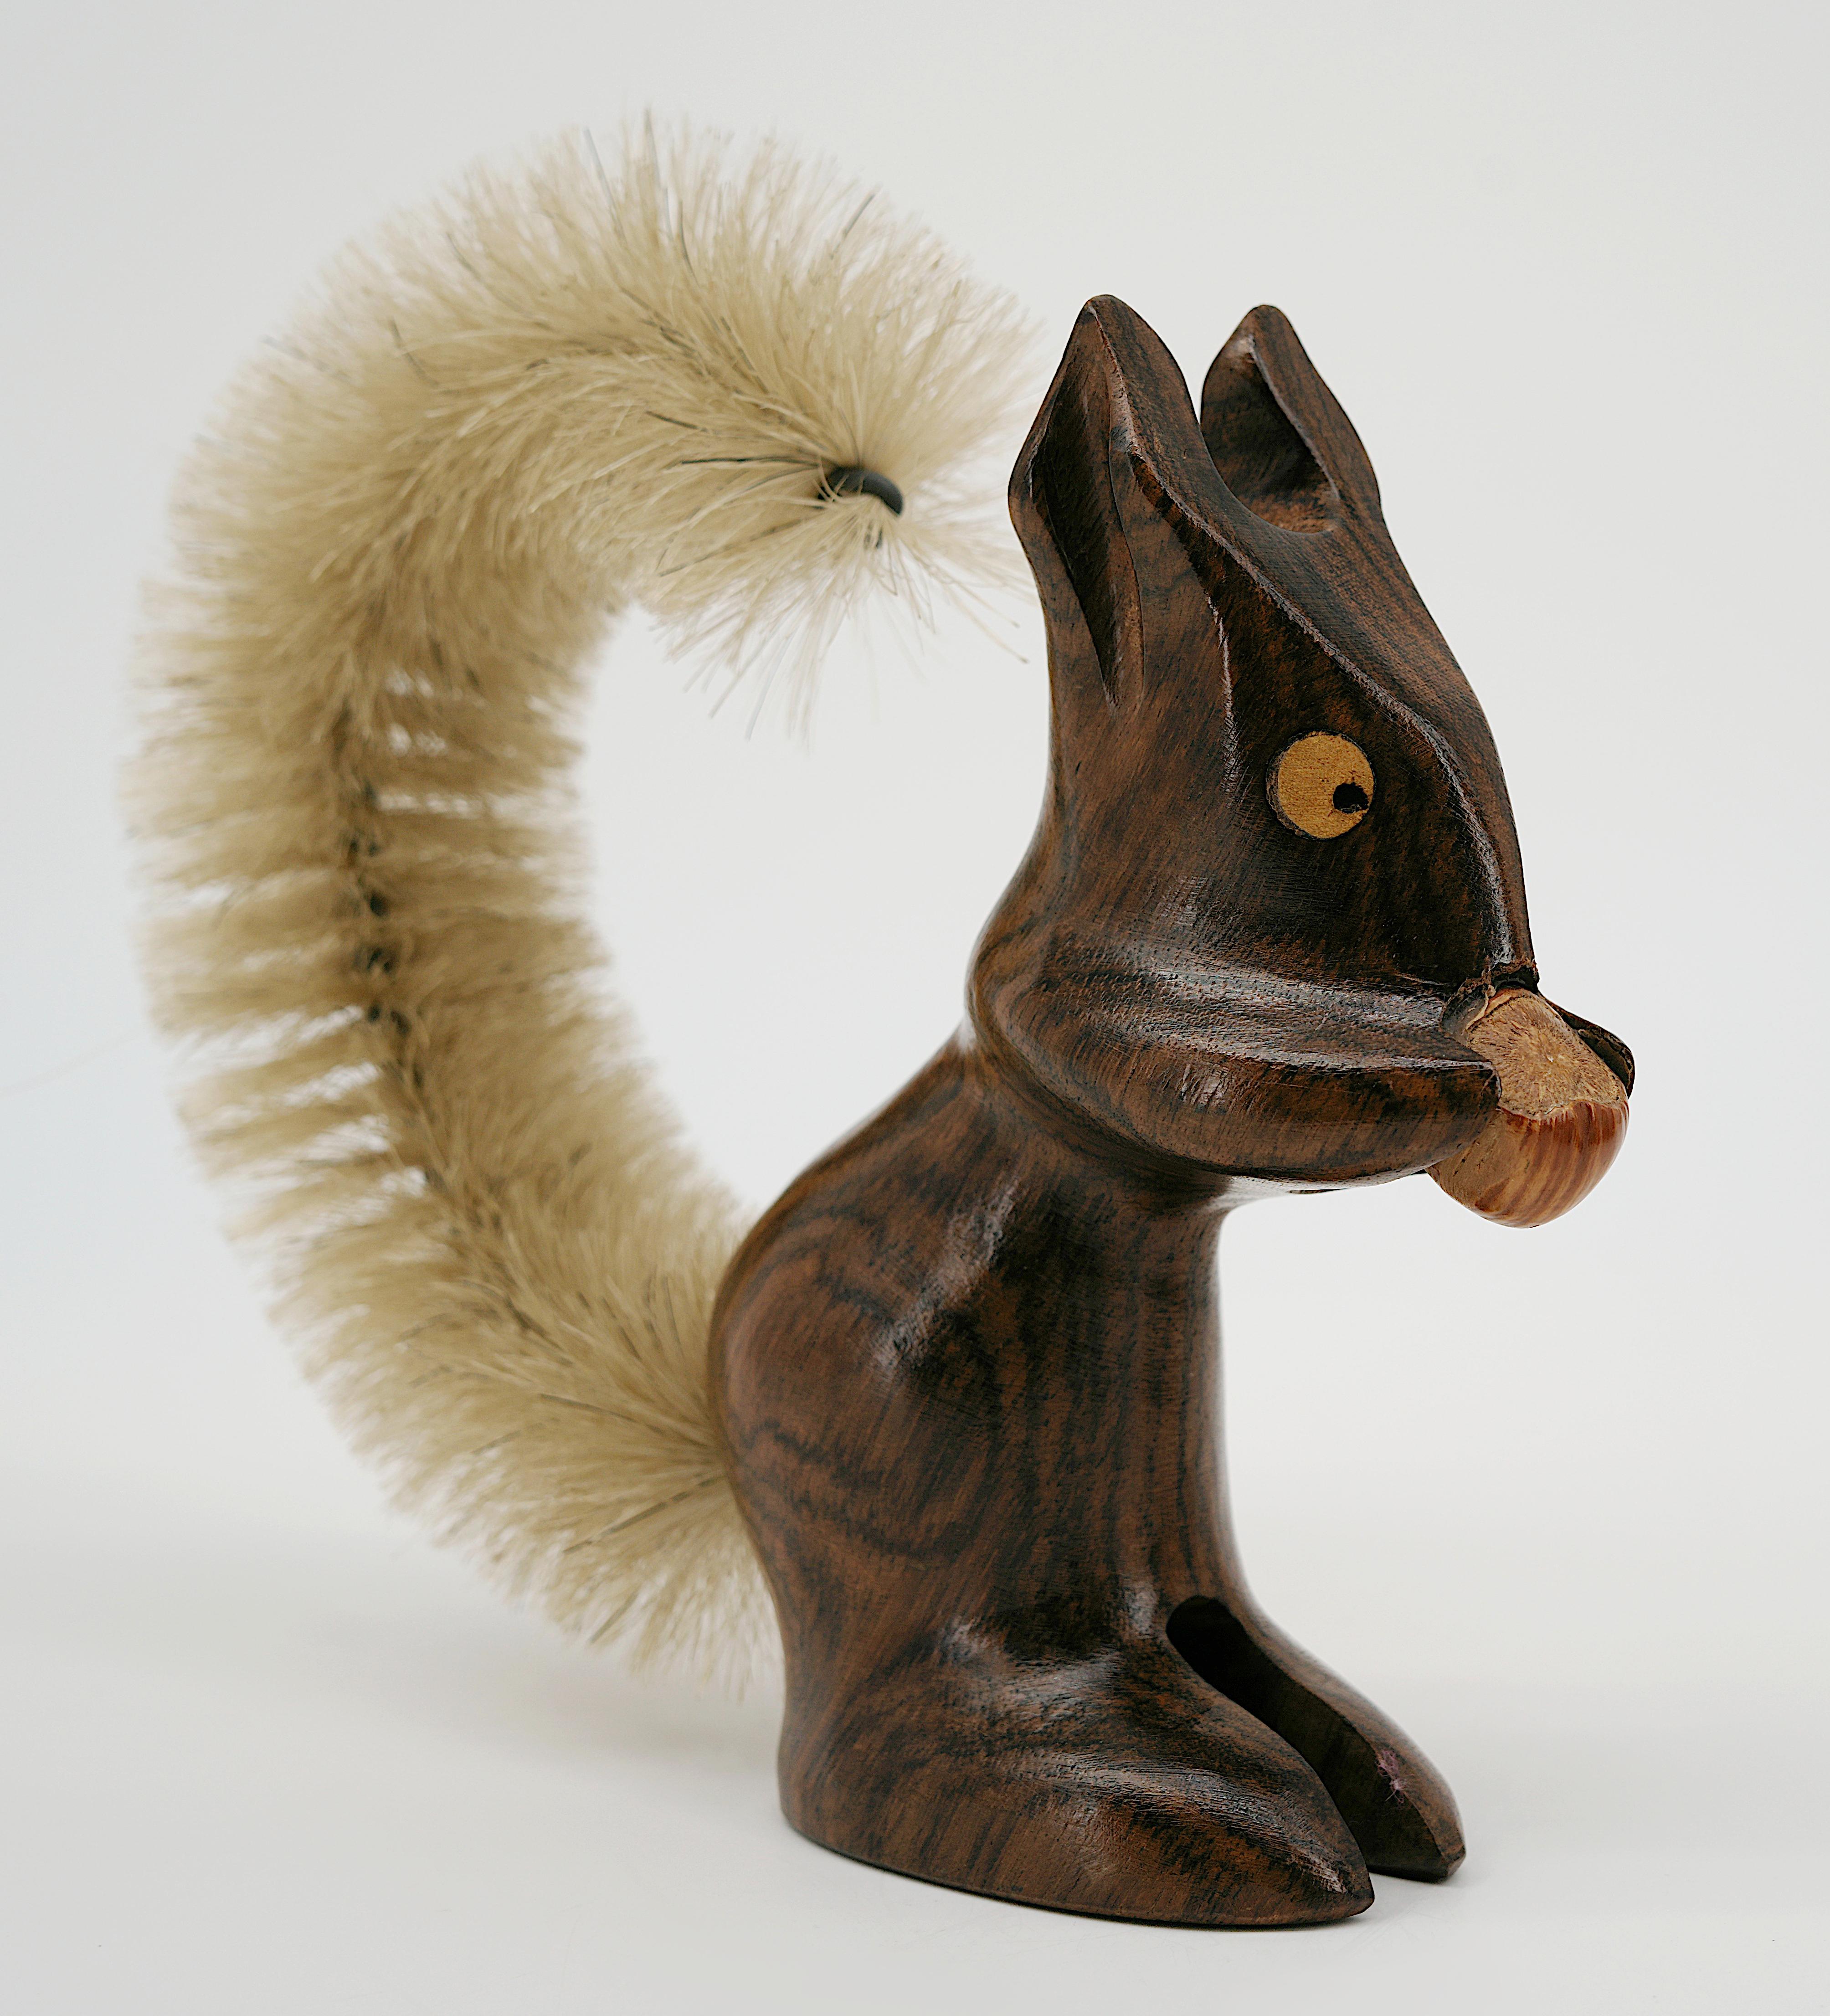 Max Meder, Hand Carved Wooden Squirrel Brush & Pan, France, 1950s For Sale 1